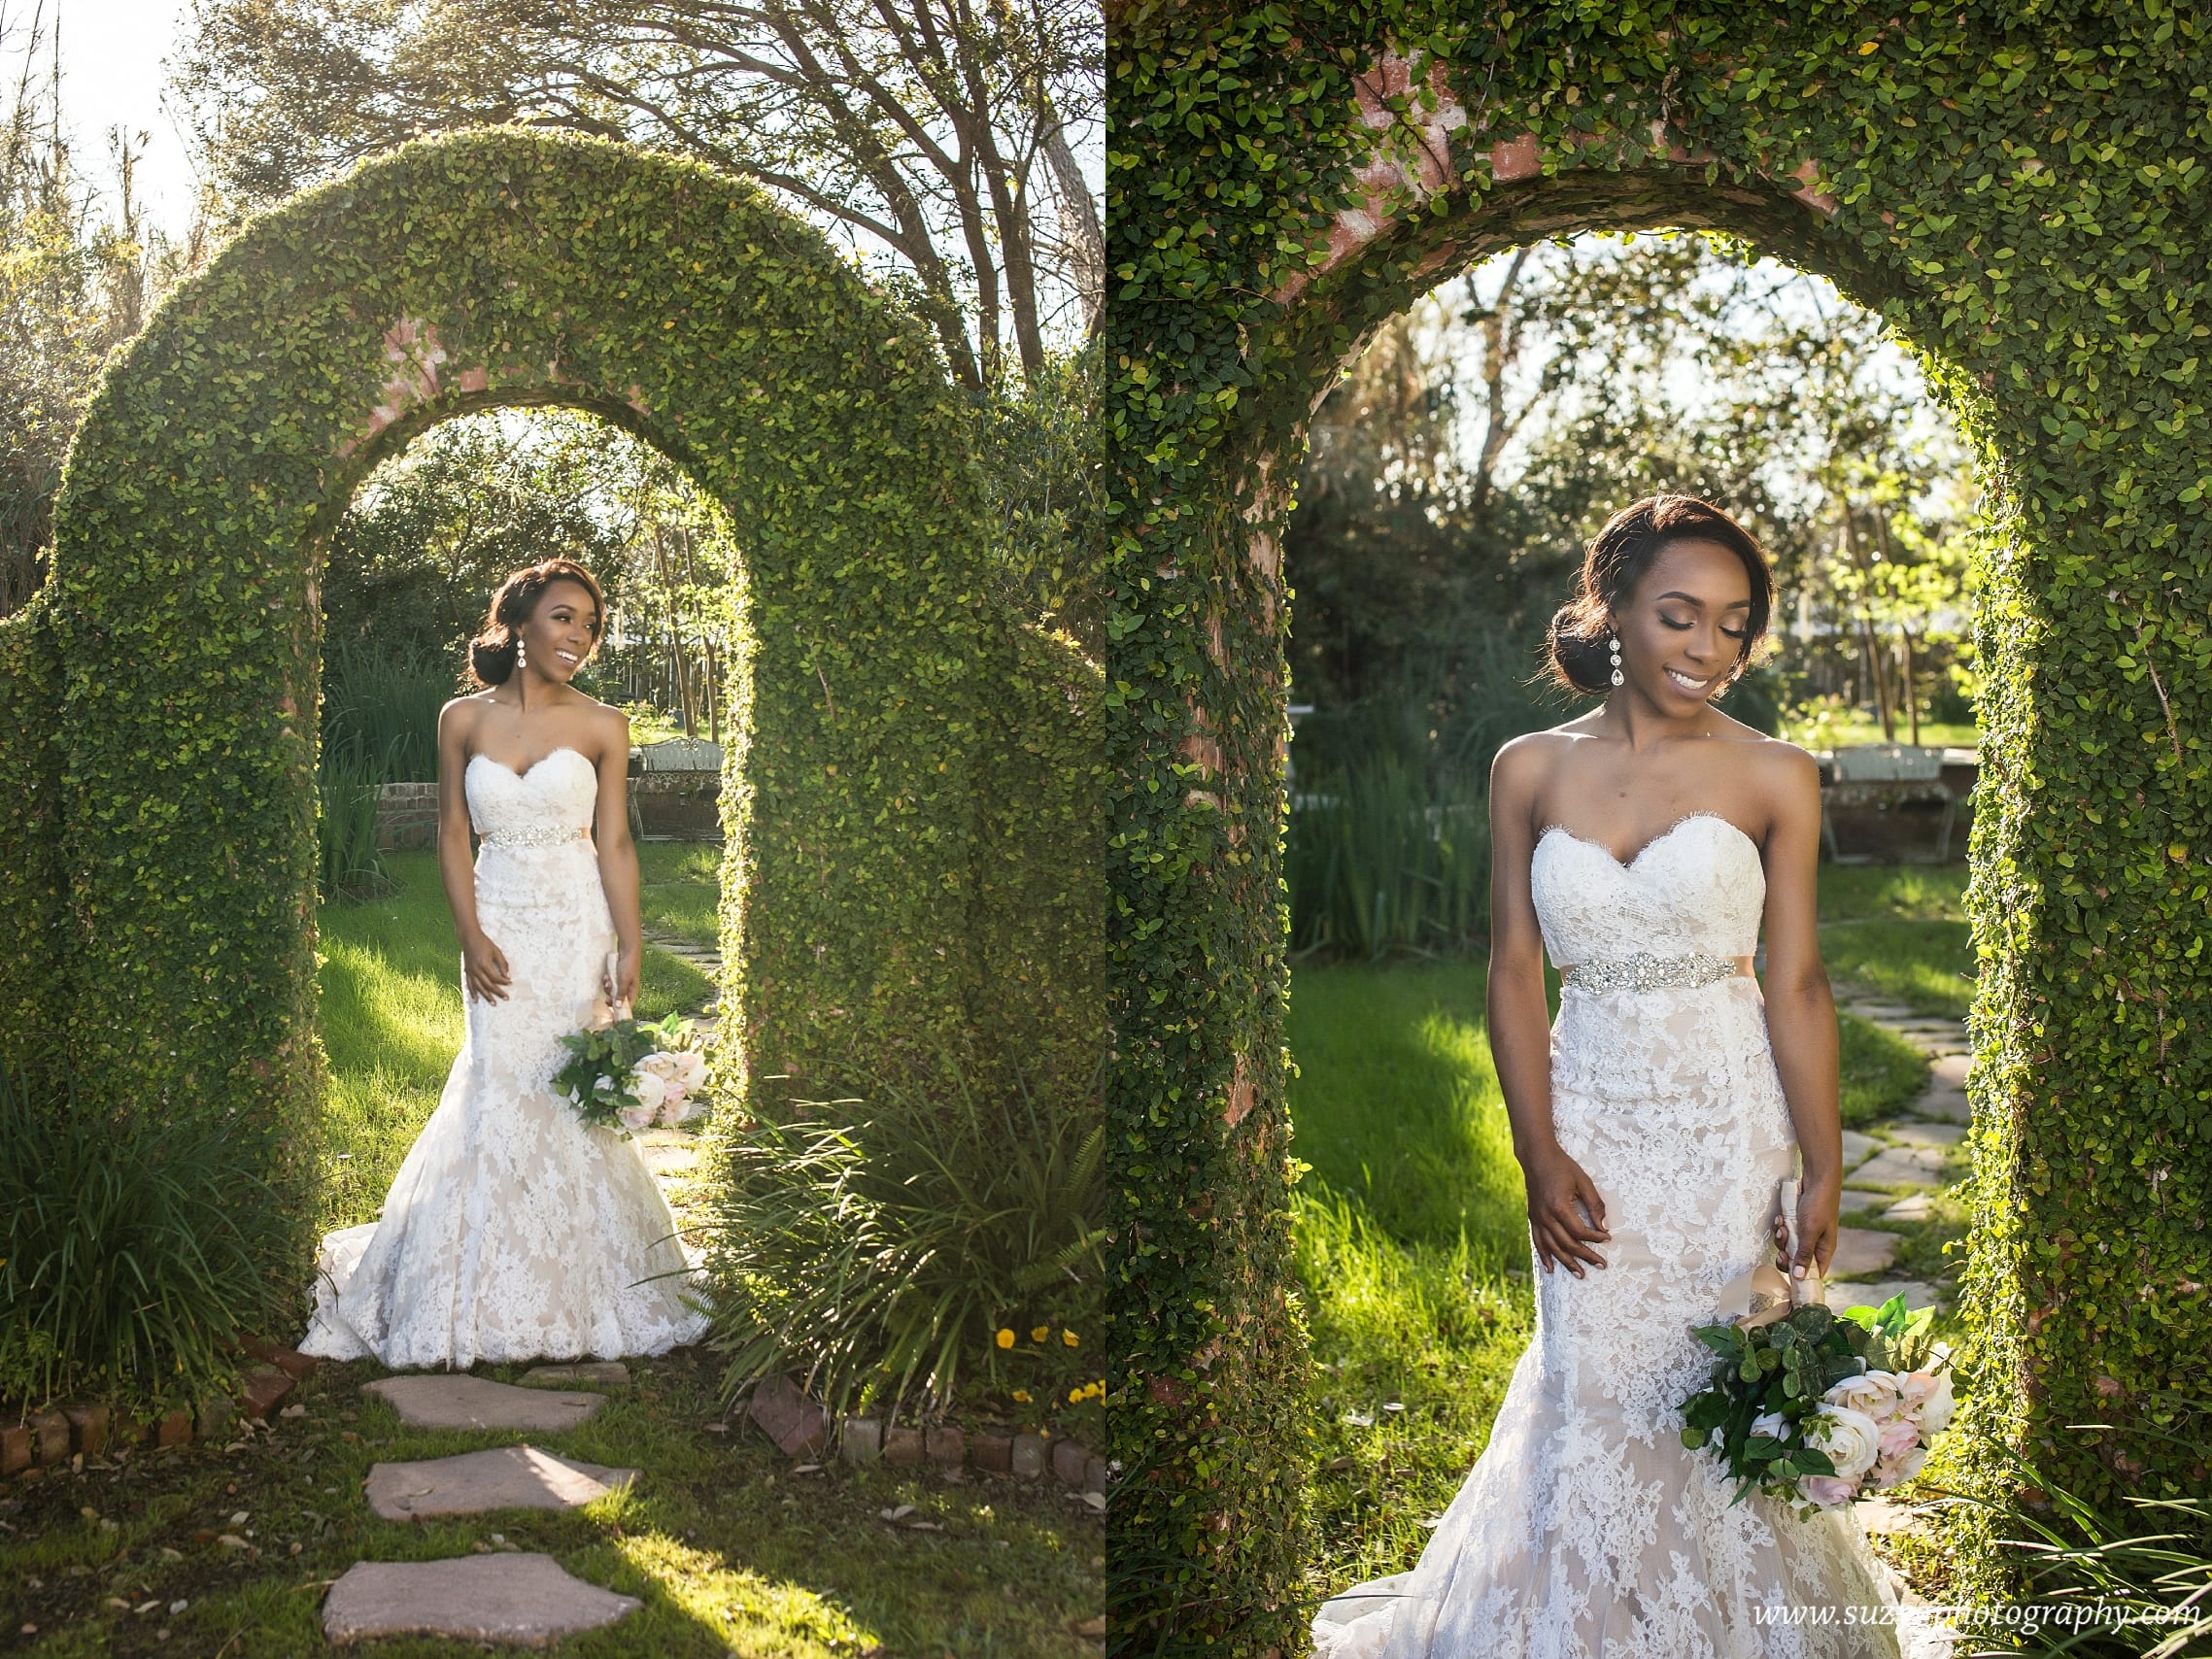 https://suzygphotoblog.com/wp-content/uploads/2017/03/Bridals-Secret-Garden-Bridal-Photography-Suzy-G-Photography-Suzy-G_0021.jpg